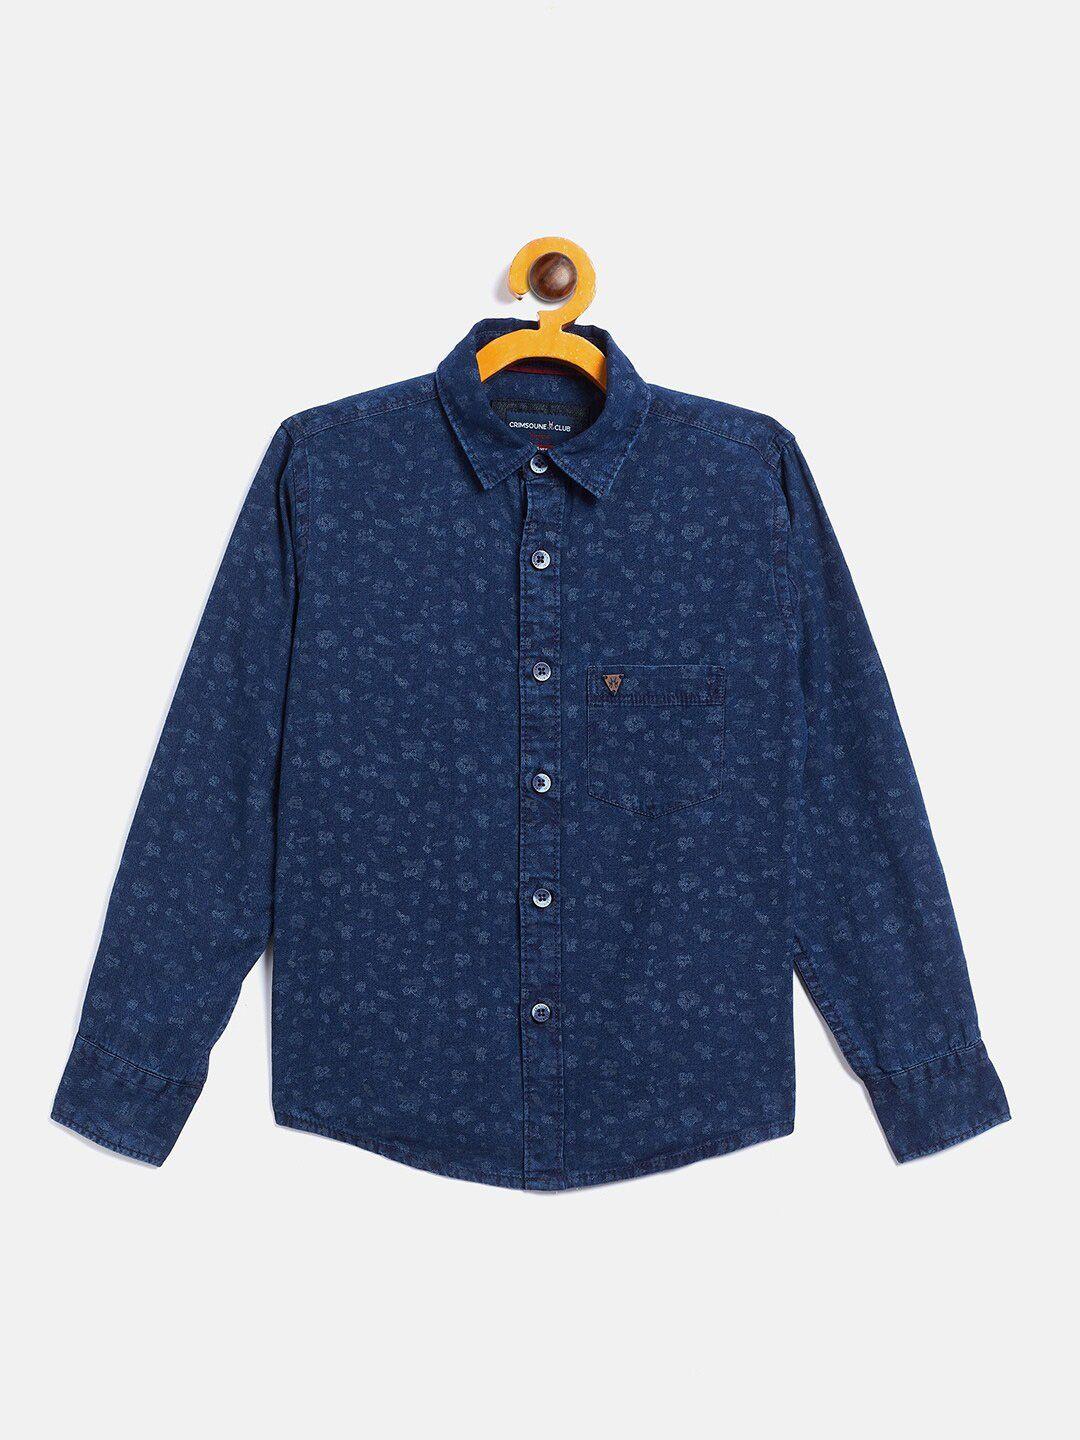 crimsoune club boys blue floral opaque printed cotton casual shirt